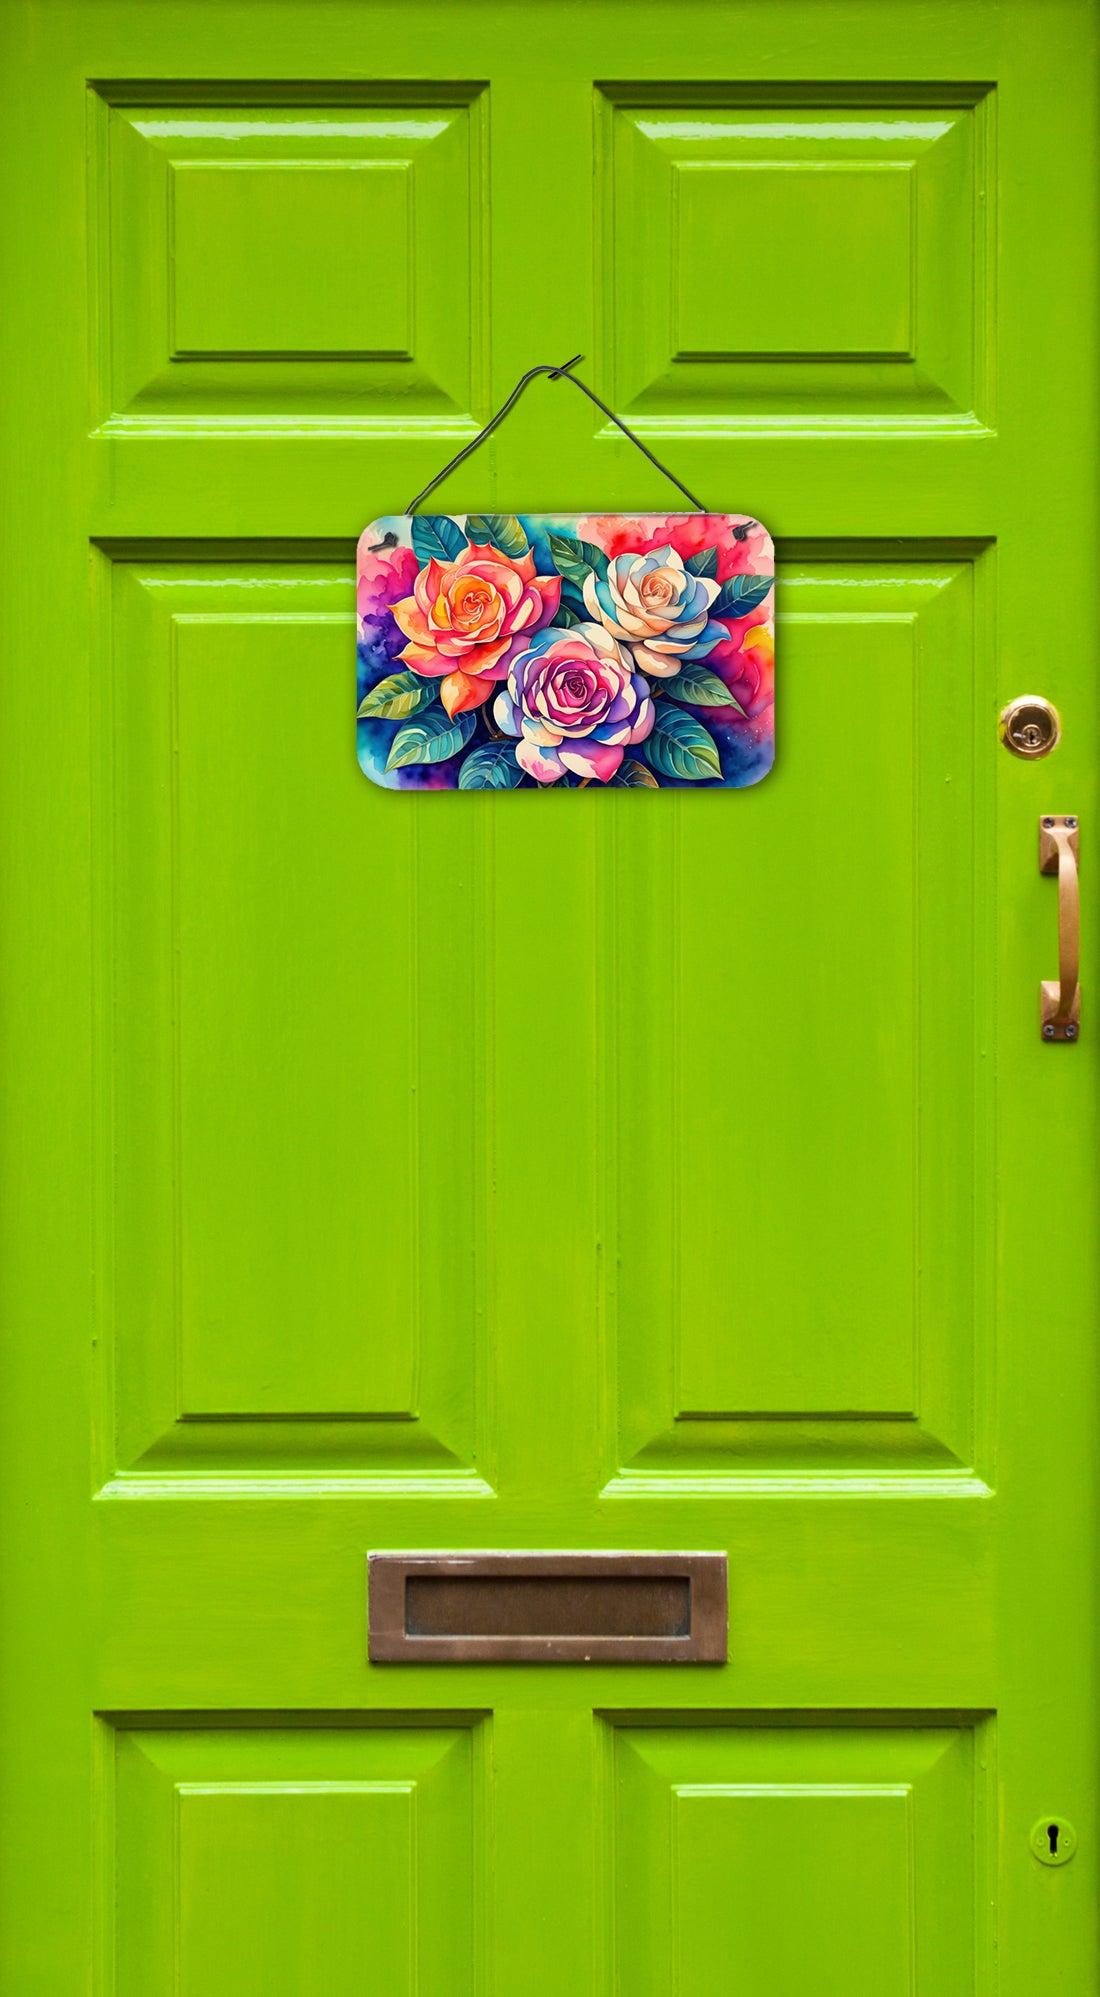 Buy this Gardenias in Color Wall or Door Hanging Prints